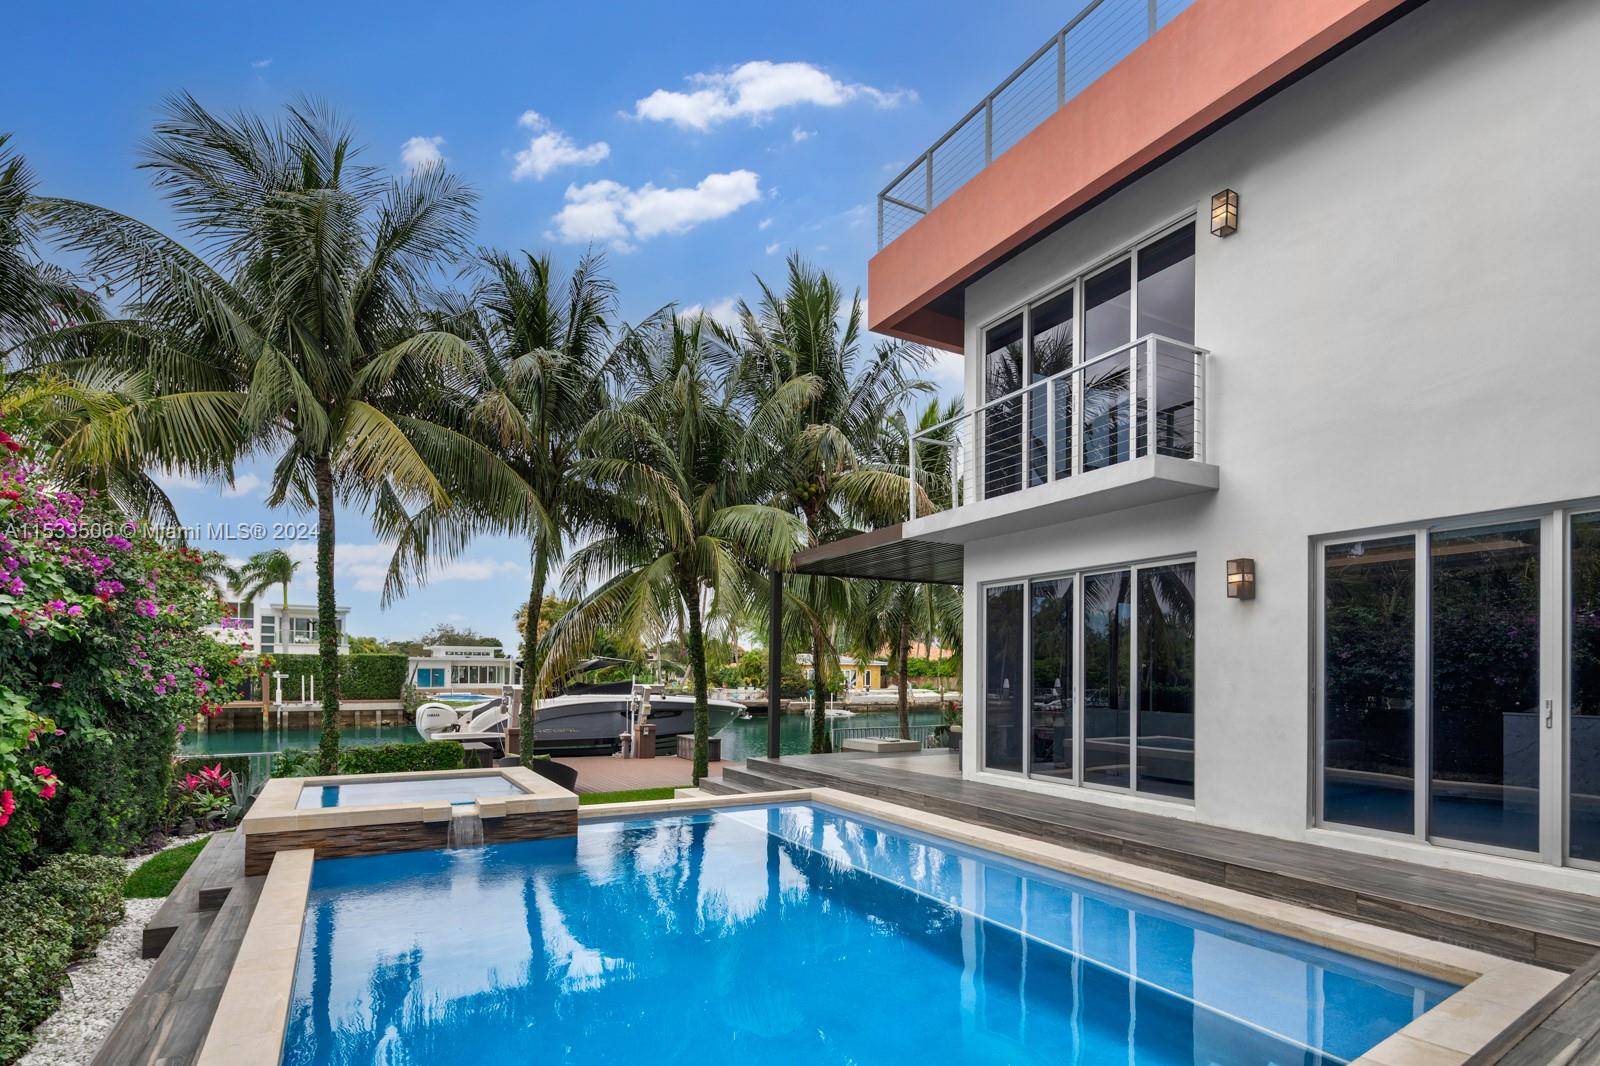 Property for Sale at 1355 Marseille Dr, Miami Beach, Miami-Dade County, Florida - Bedrooms: 5 
Bathrooms: 4  - $4,500,000